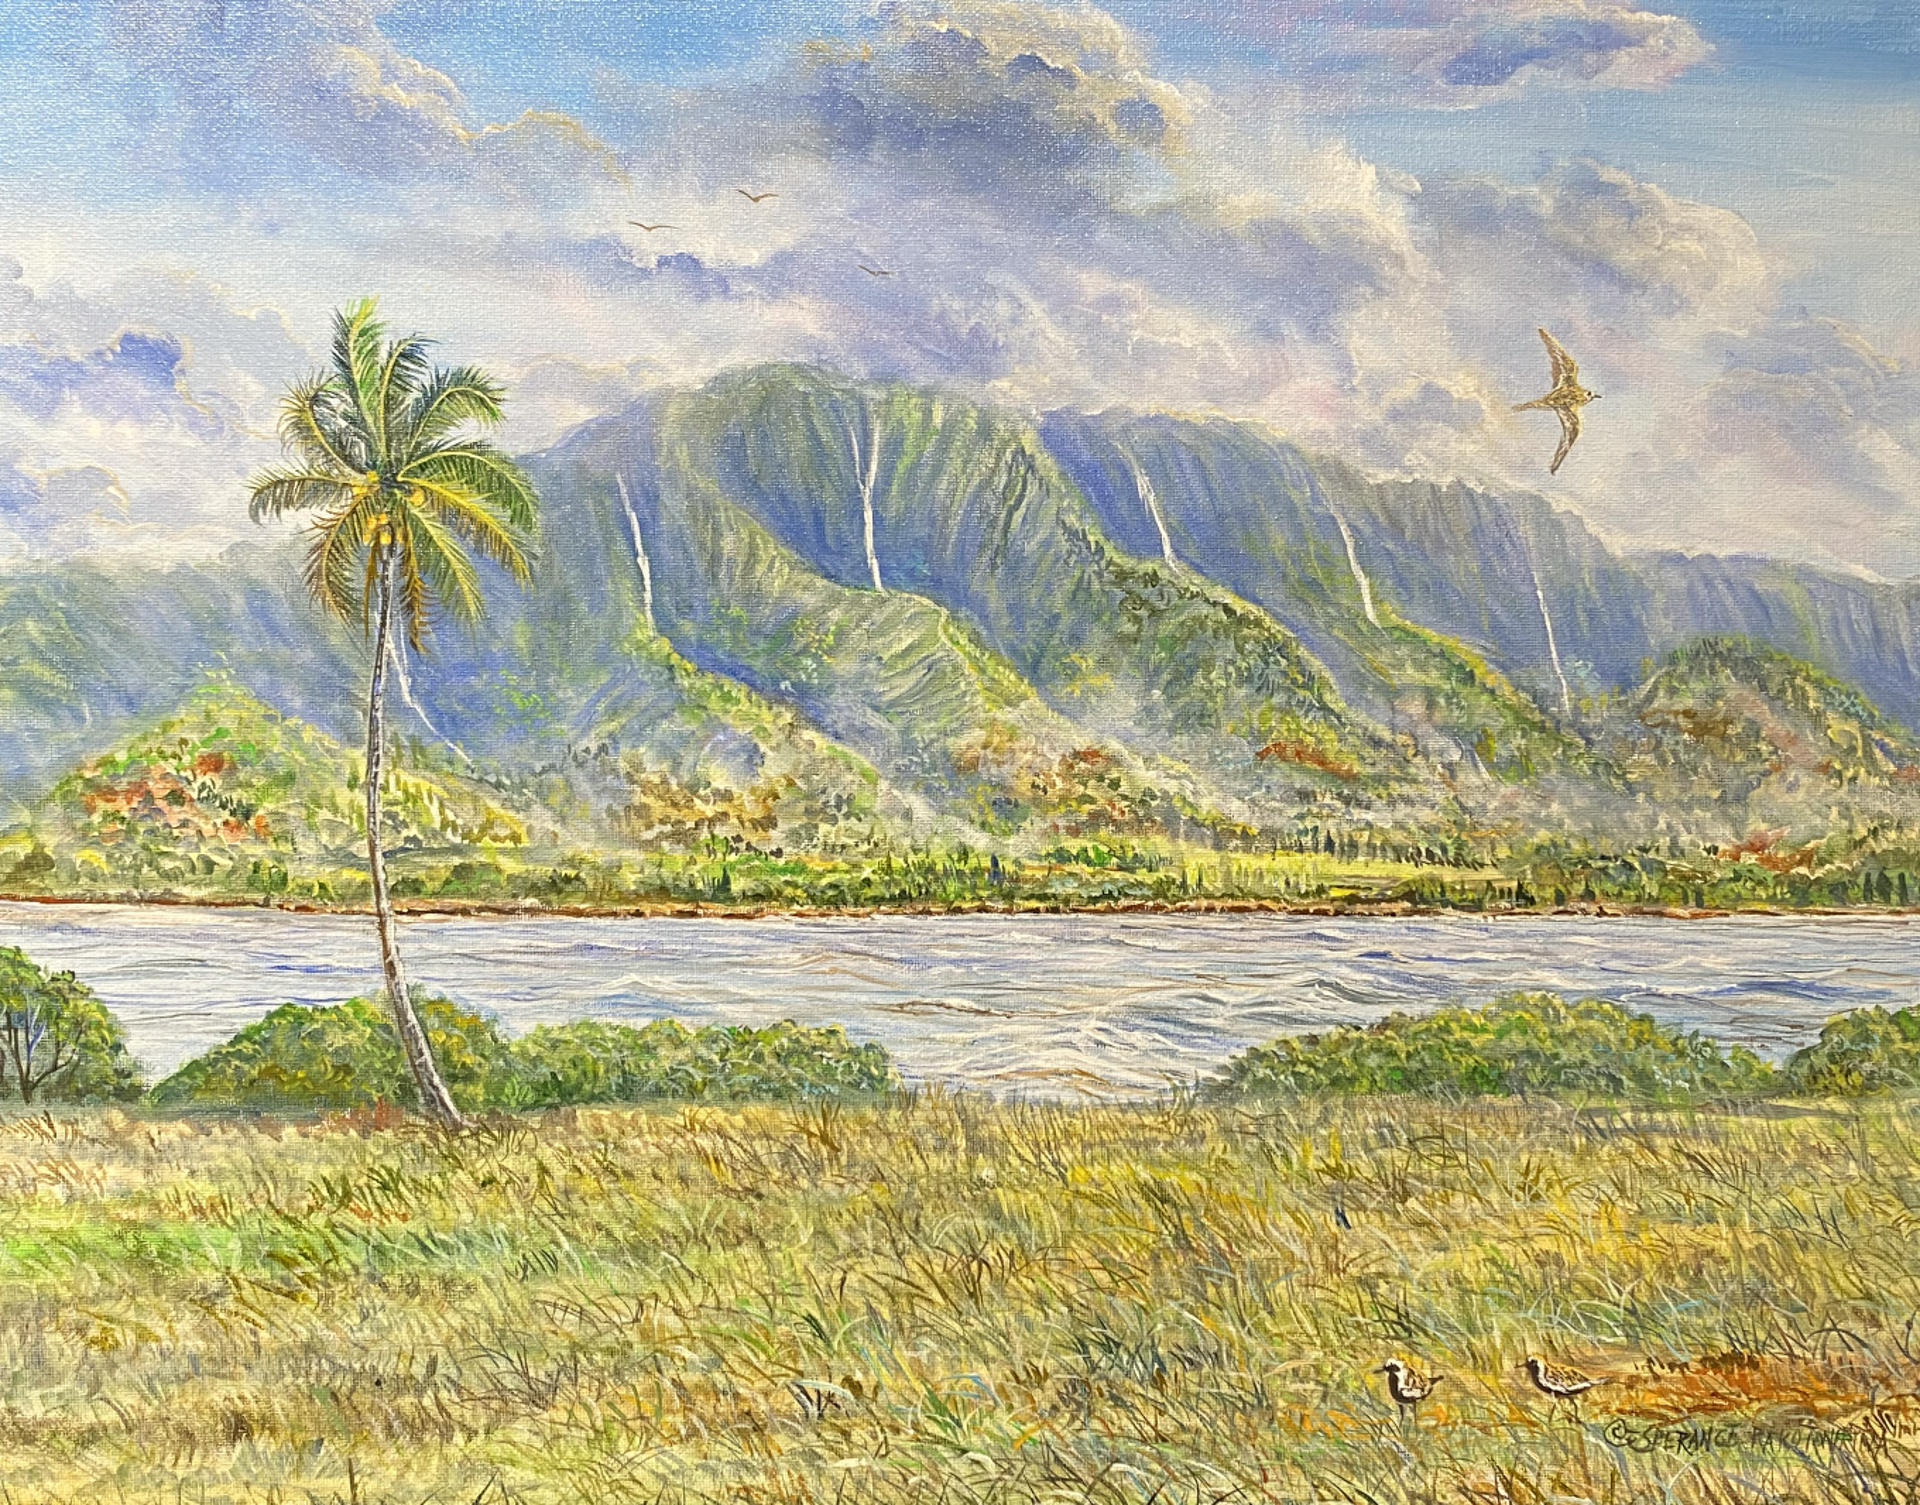 Waialua Mountain by Esperance Rakotonirina